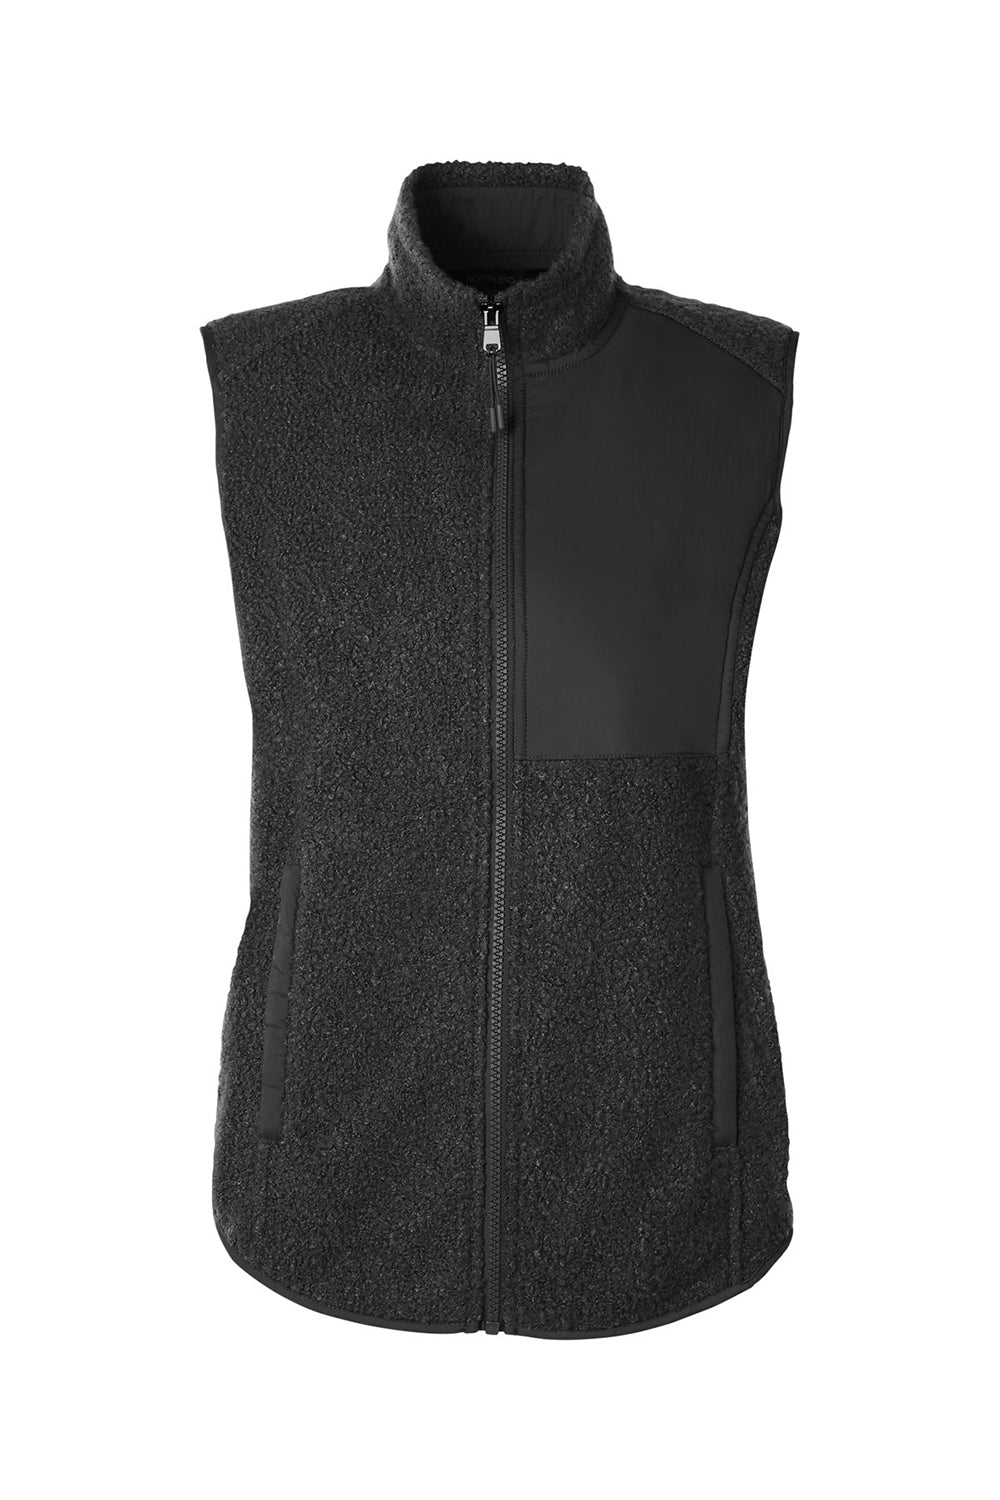 North End NE714W Womens Aura Sweater Fleece Full Zip Vest Black Flat Front